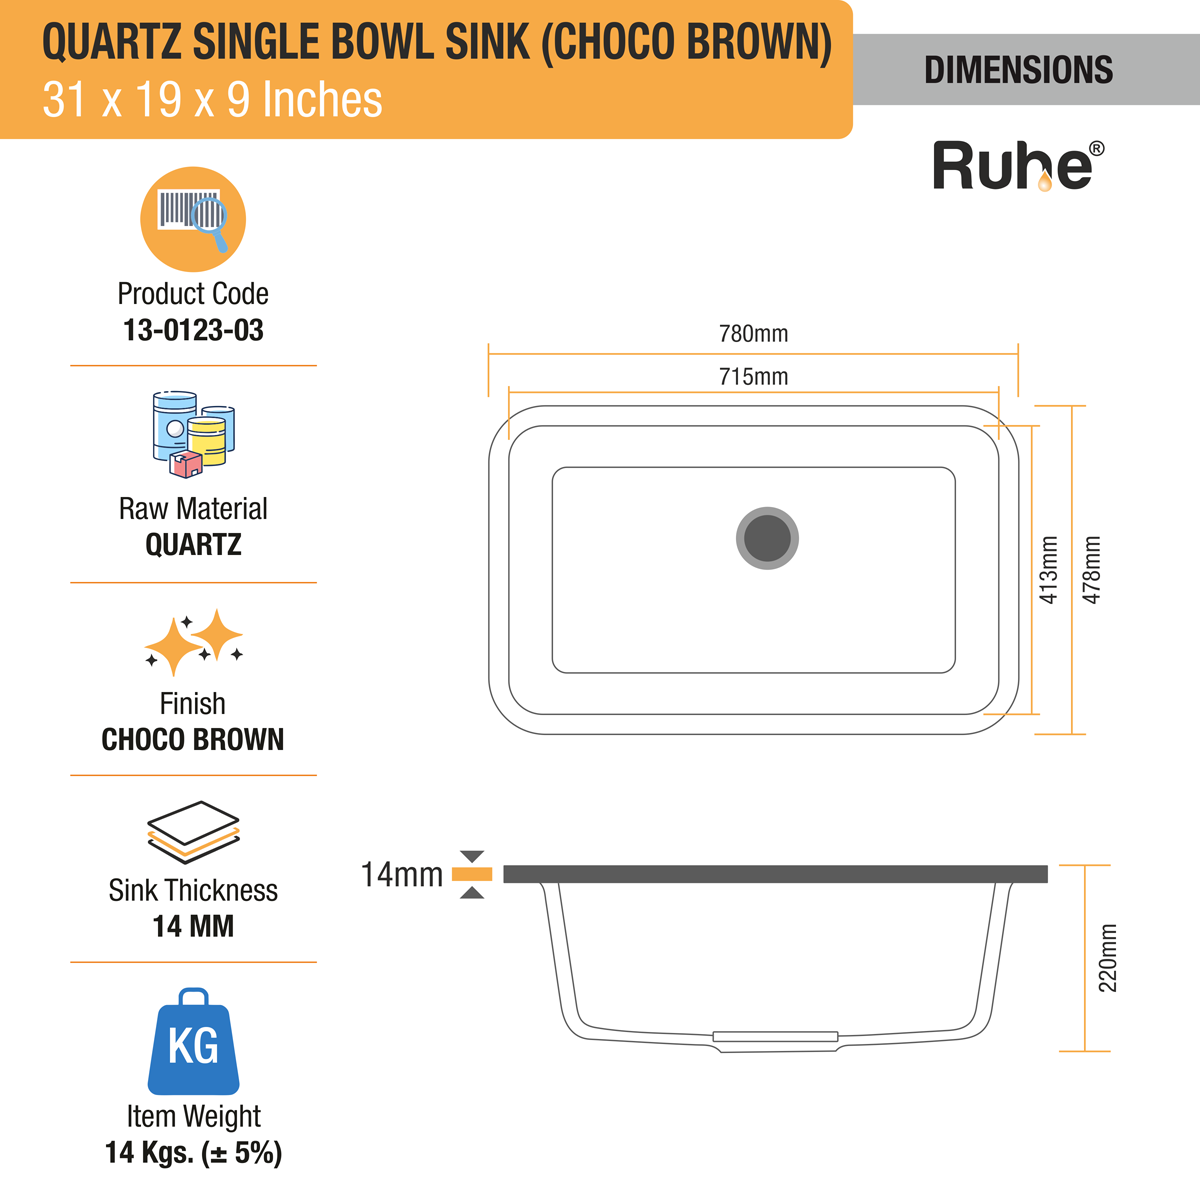 Quartz Single Bowl Kitchen Sink - Choco Brown (31 x 19 x 9 inches) - by Ruhe®